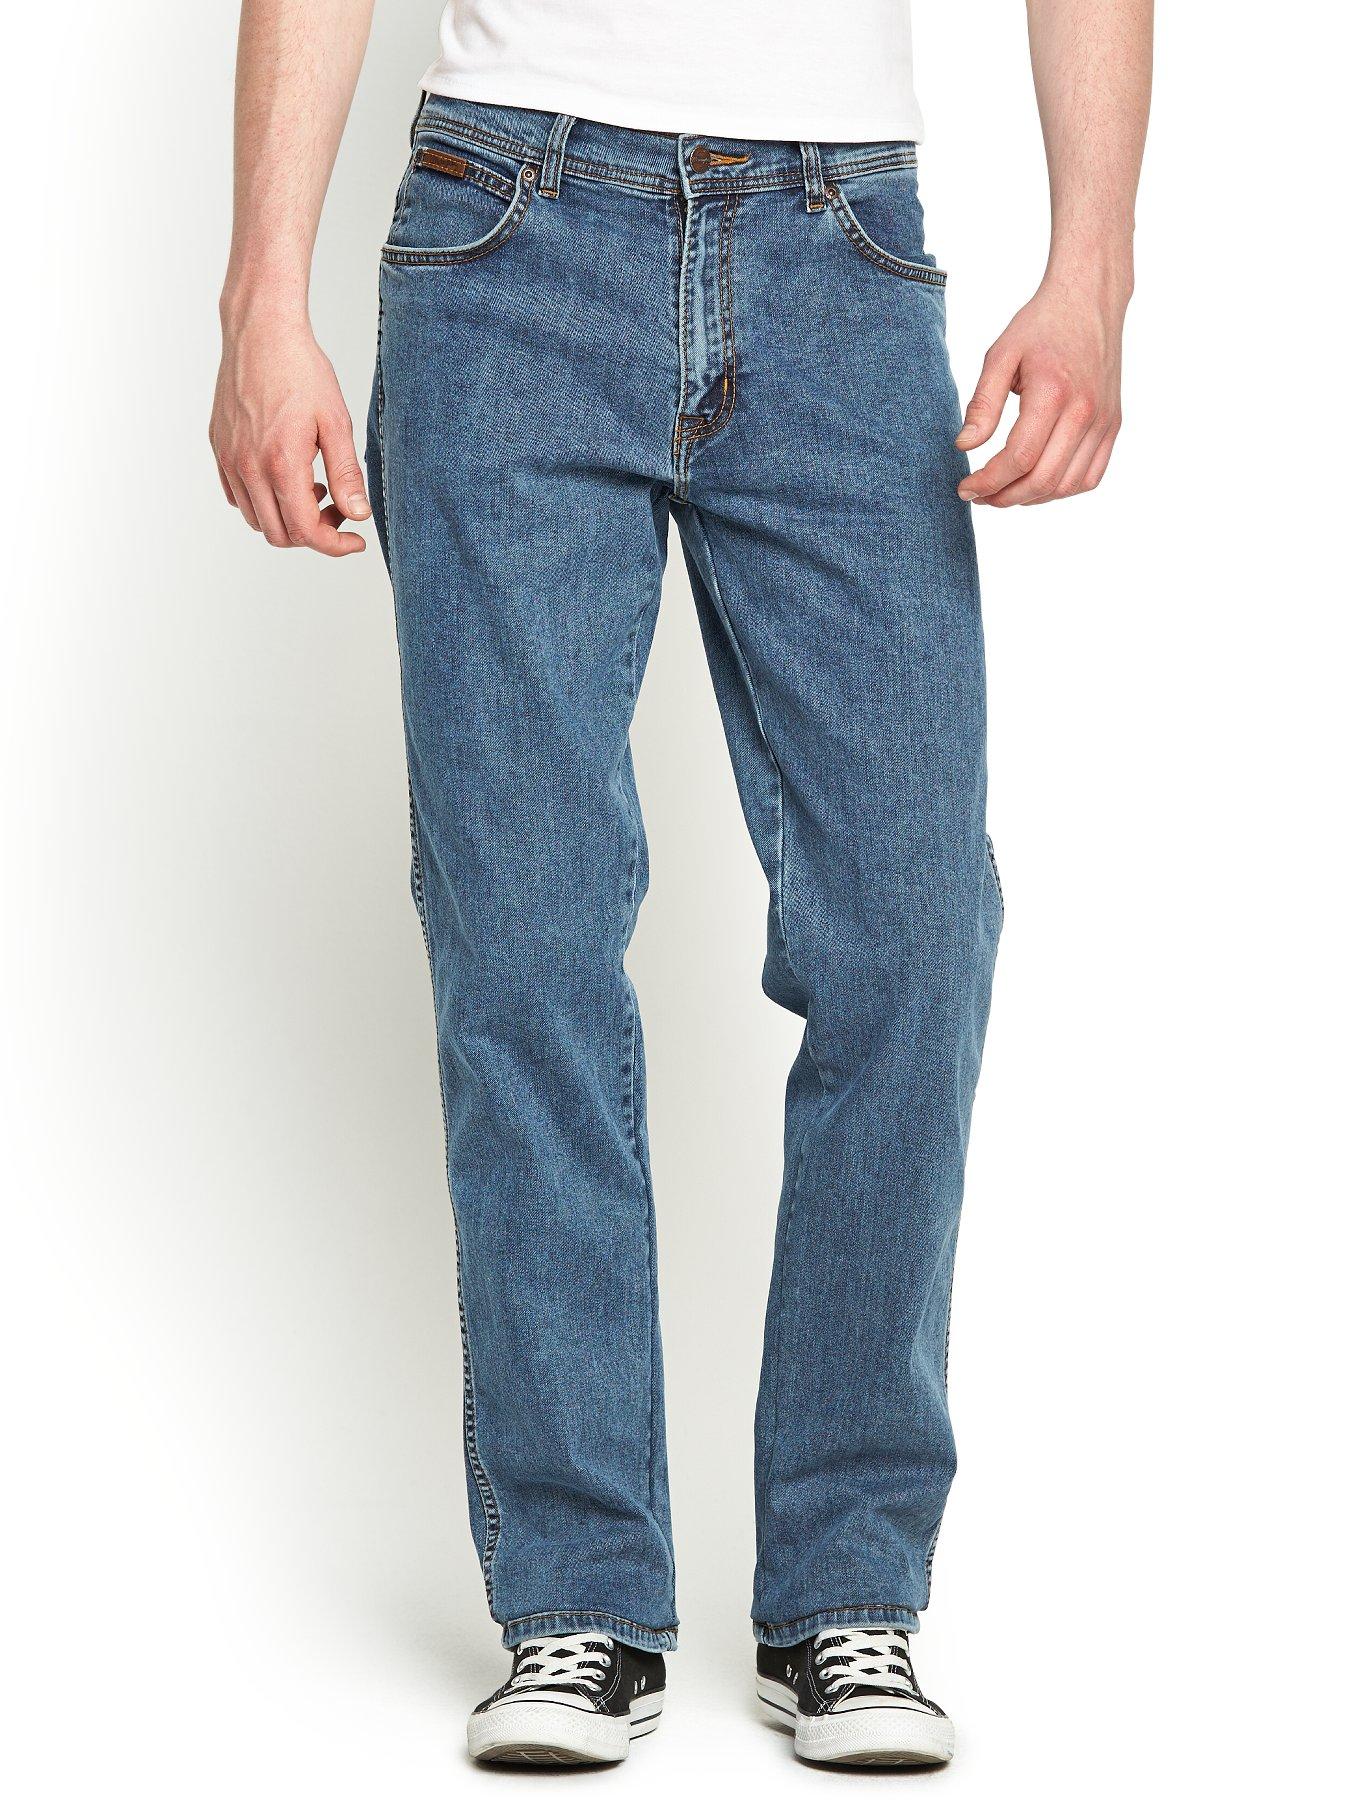 Wrangler Men's Te/as Contrast Straight Jeans 